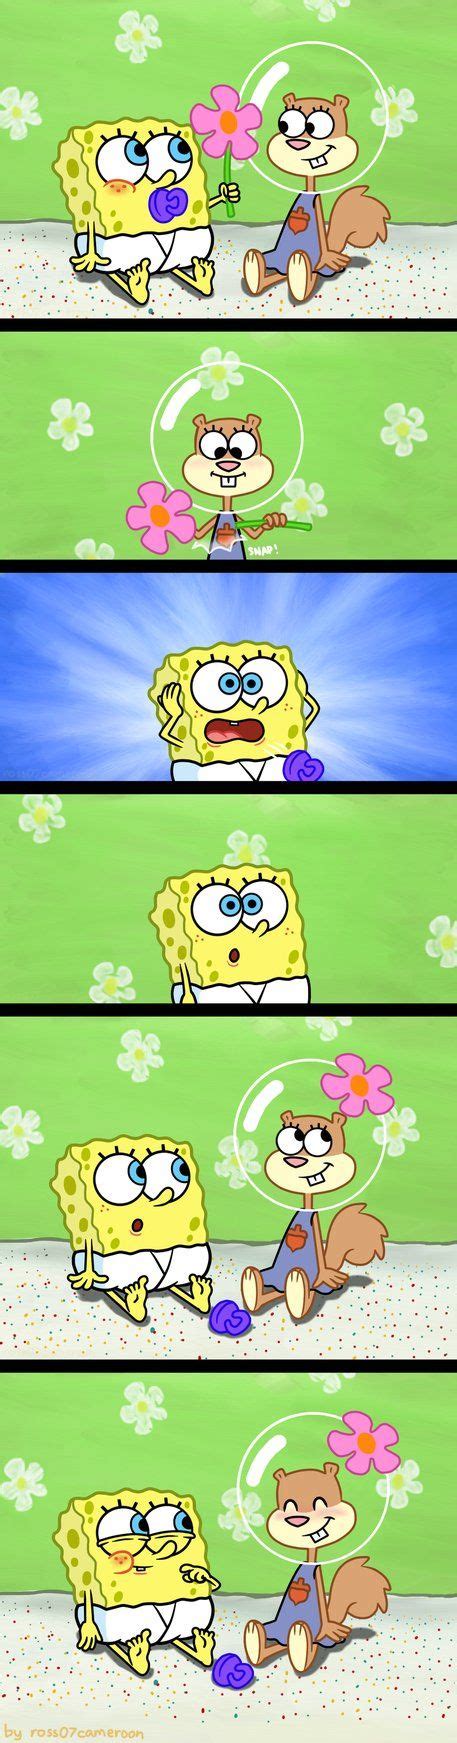 Spandy Spongebob Funny Spongebob Wallpaper Spongebob